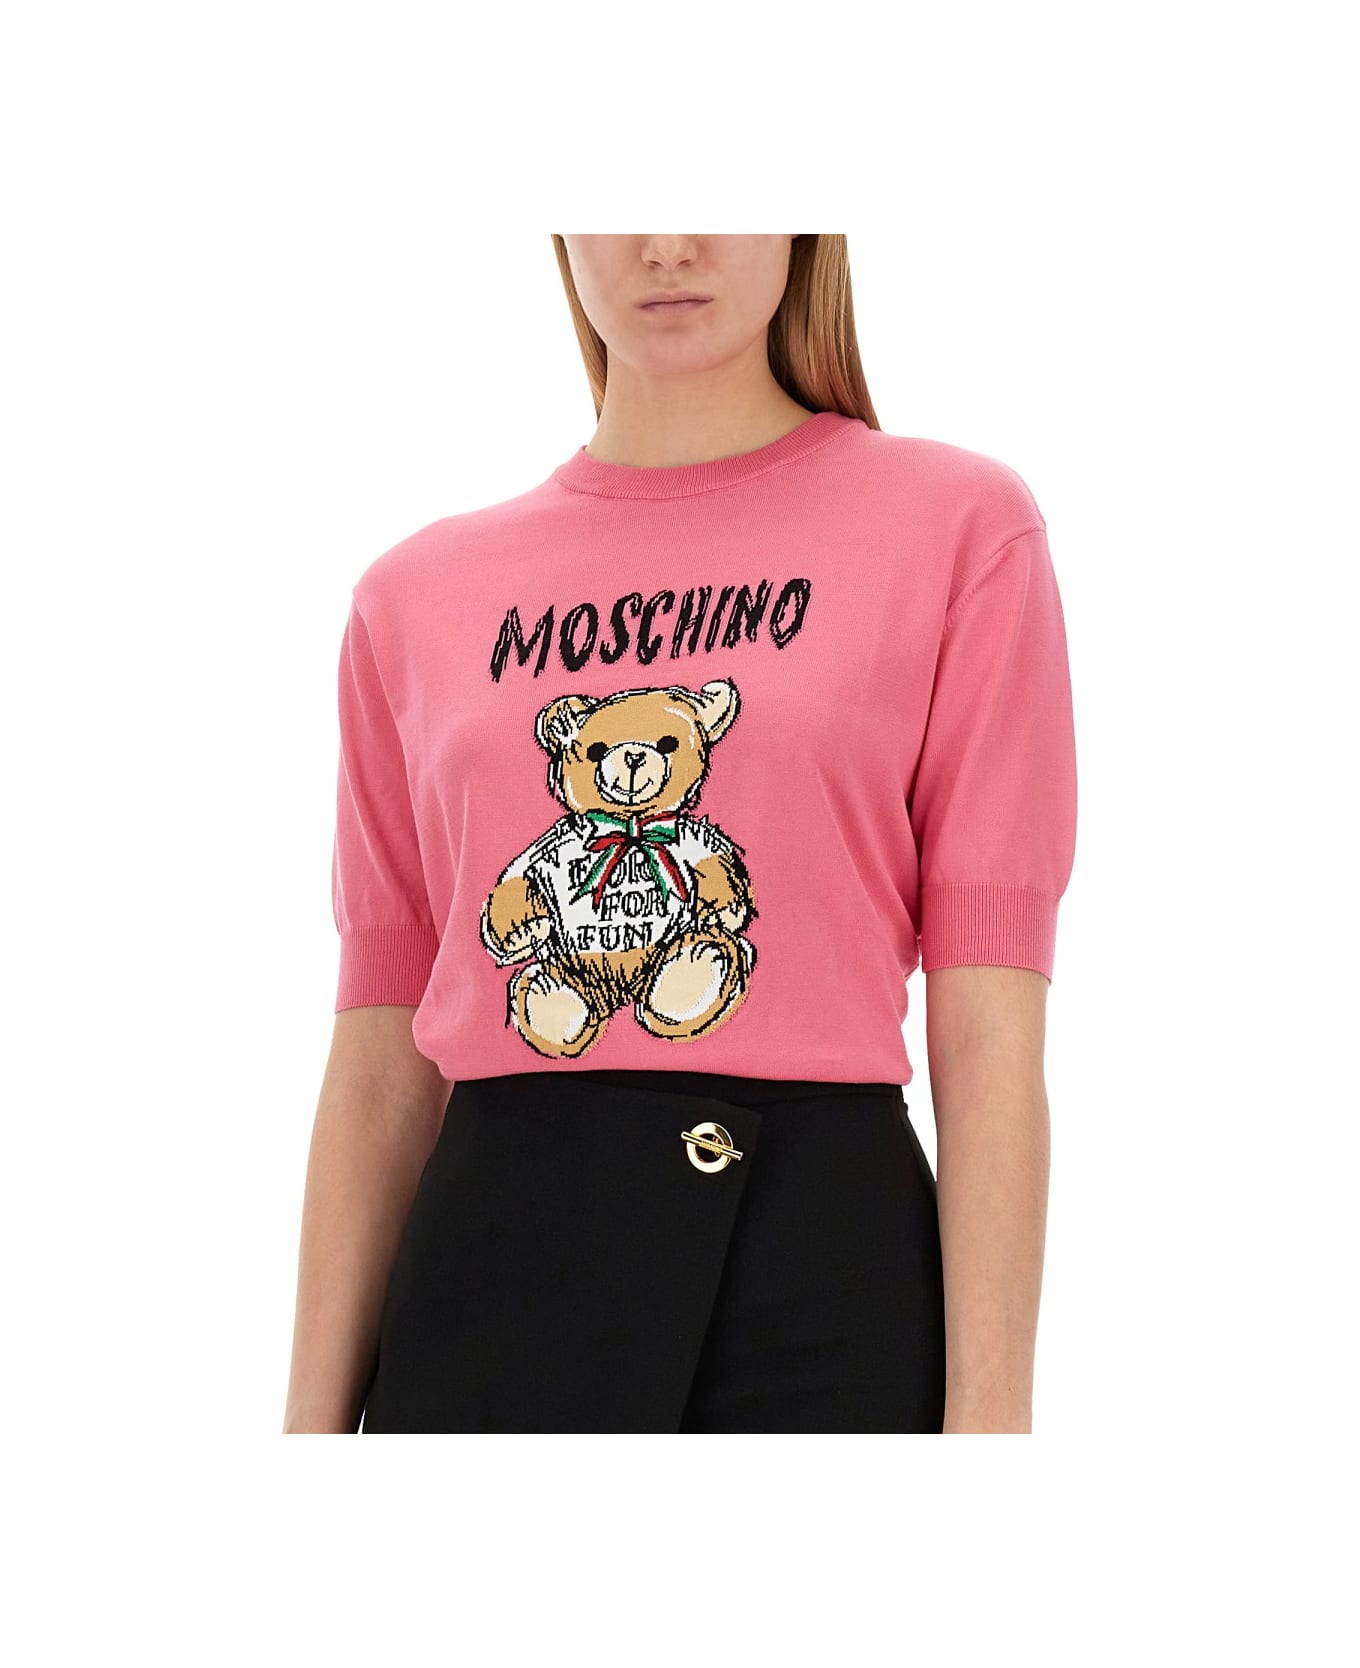 Moschino "drawn Teddy Bear" Jersey - PINK